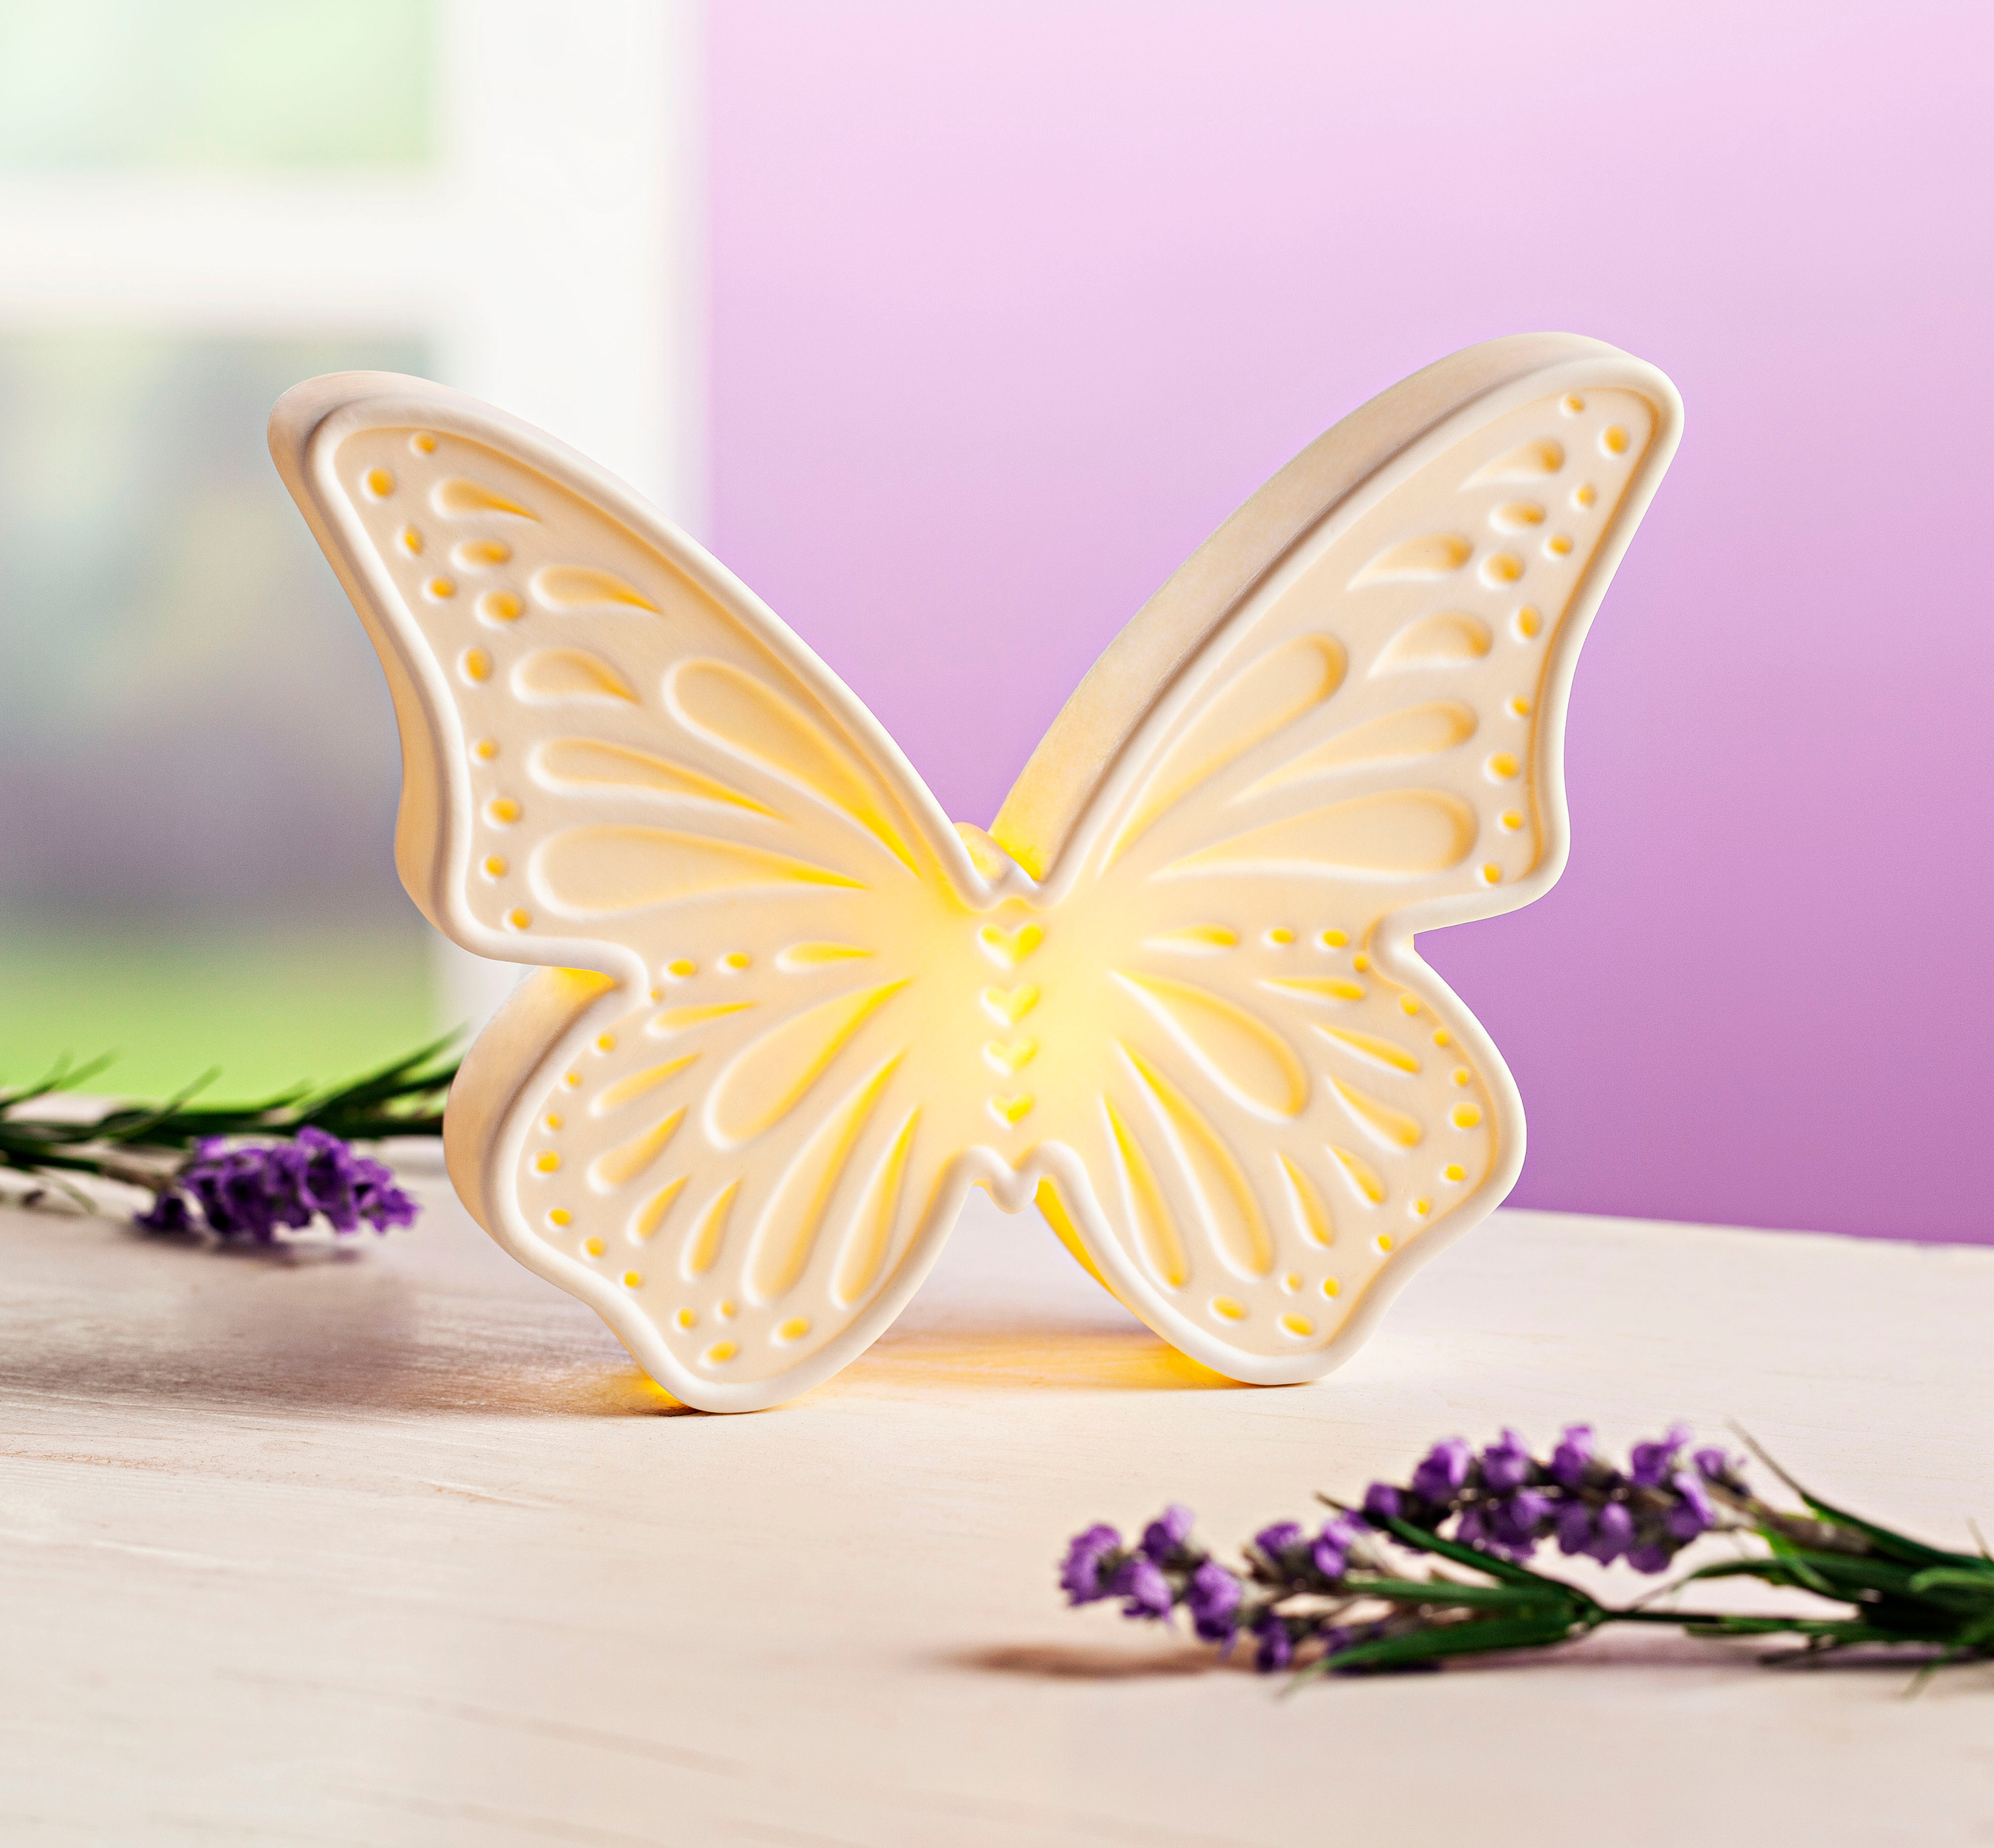 LED-Deko White Butterfly jetzt bei Weltbild.de bestellen